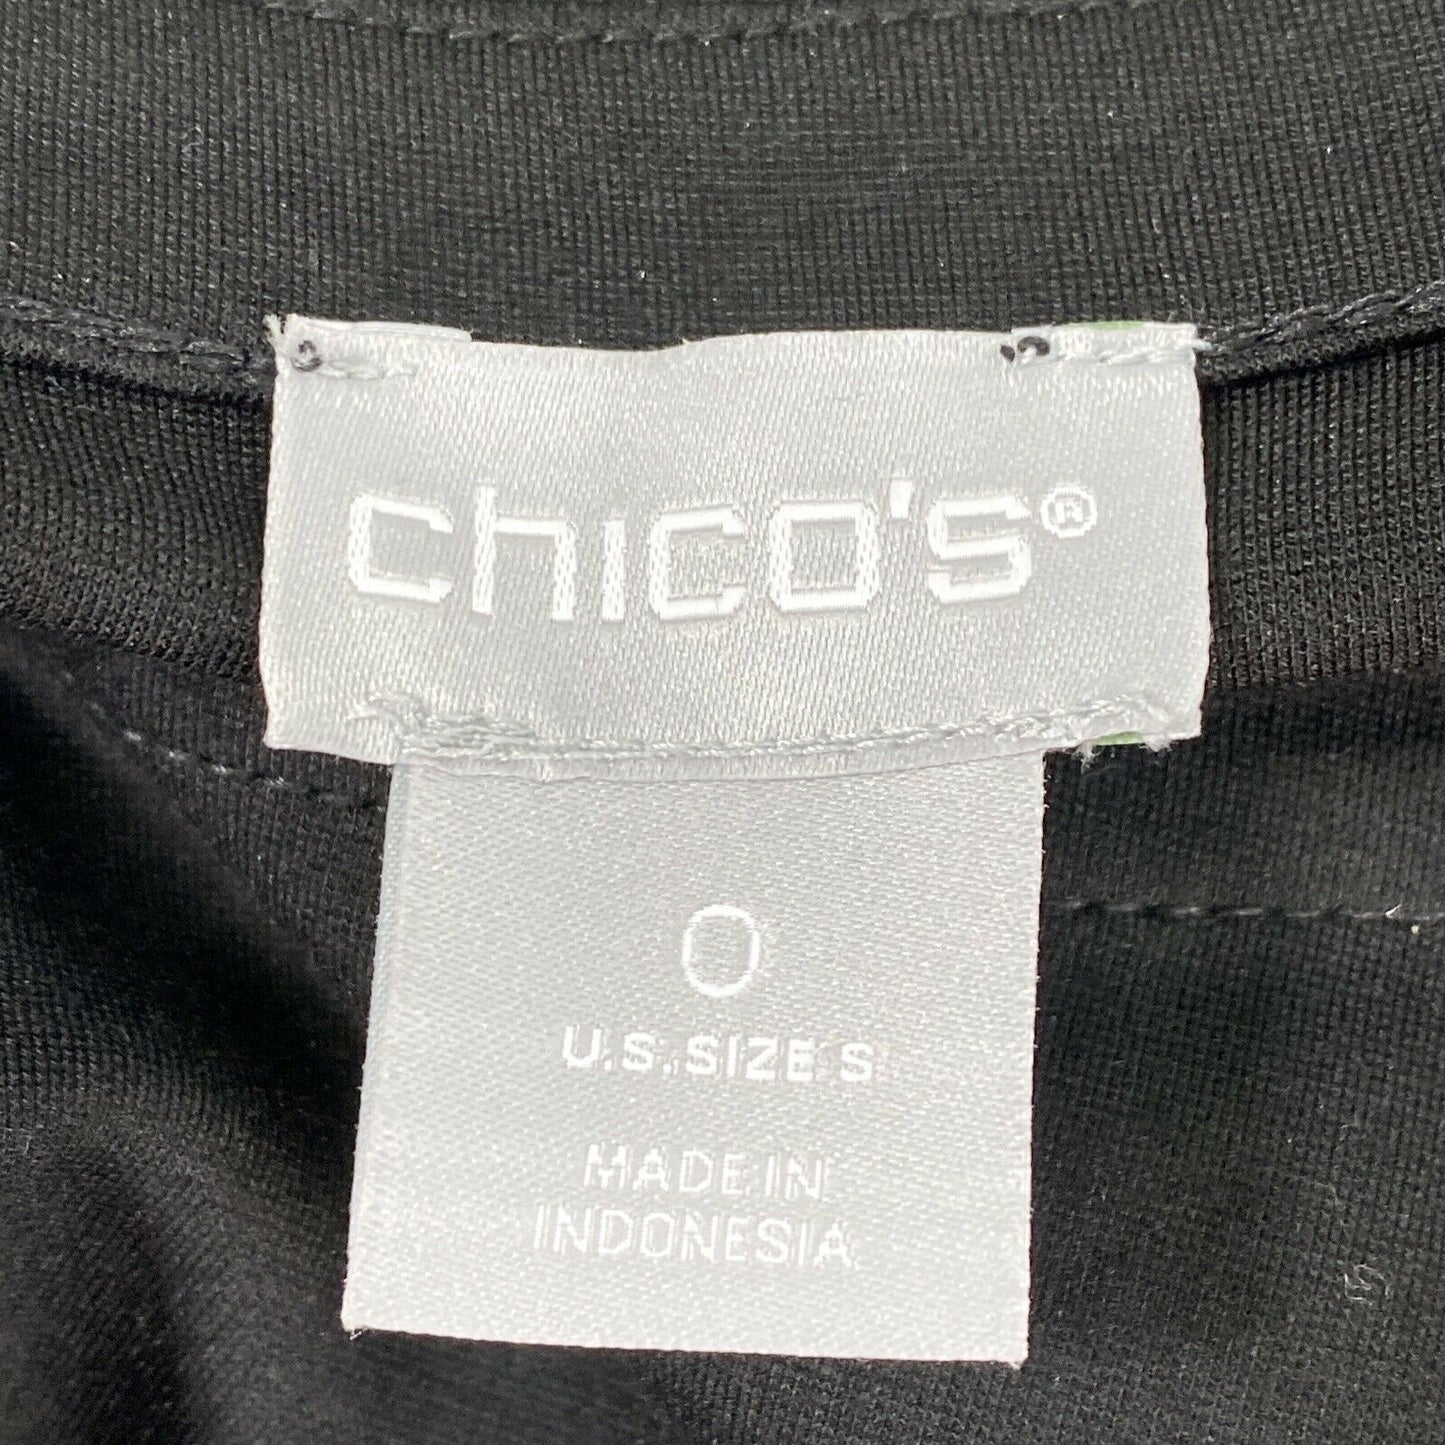 Chico's Women's Black Ponte Button Sleeve Tunic Top Sz 0/US S